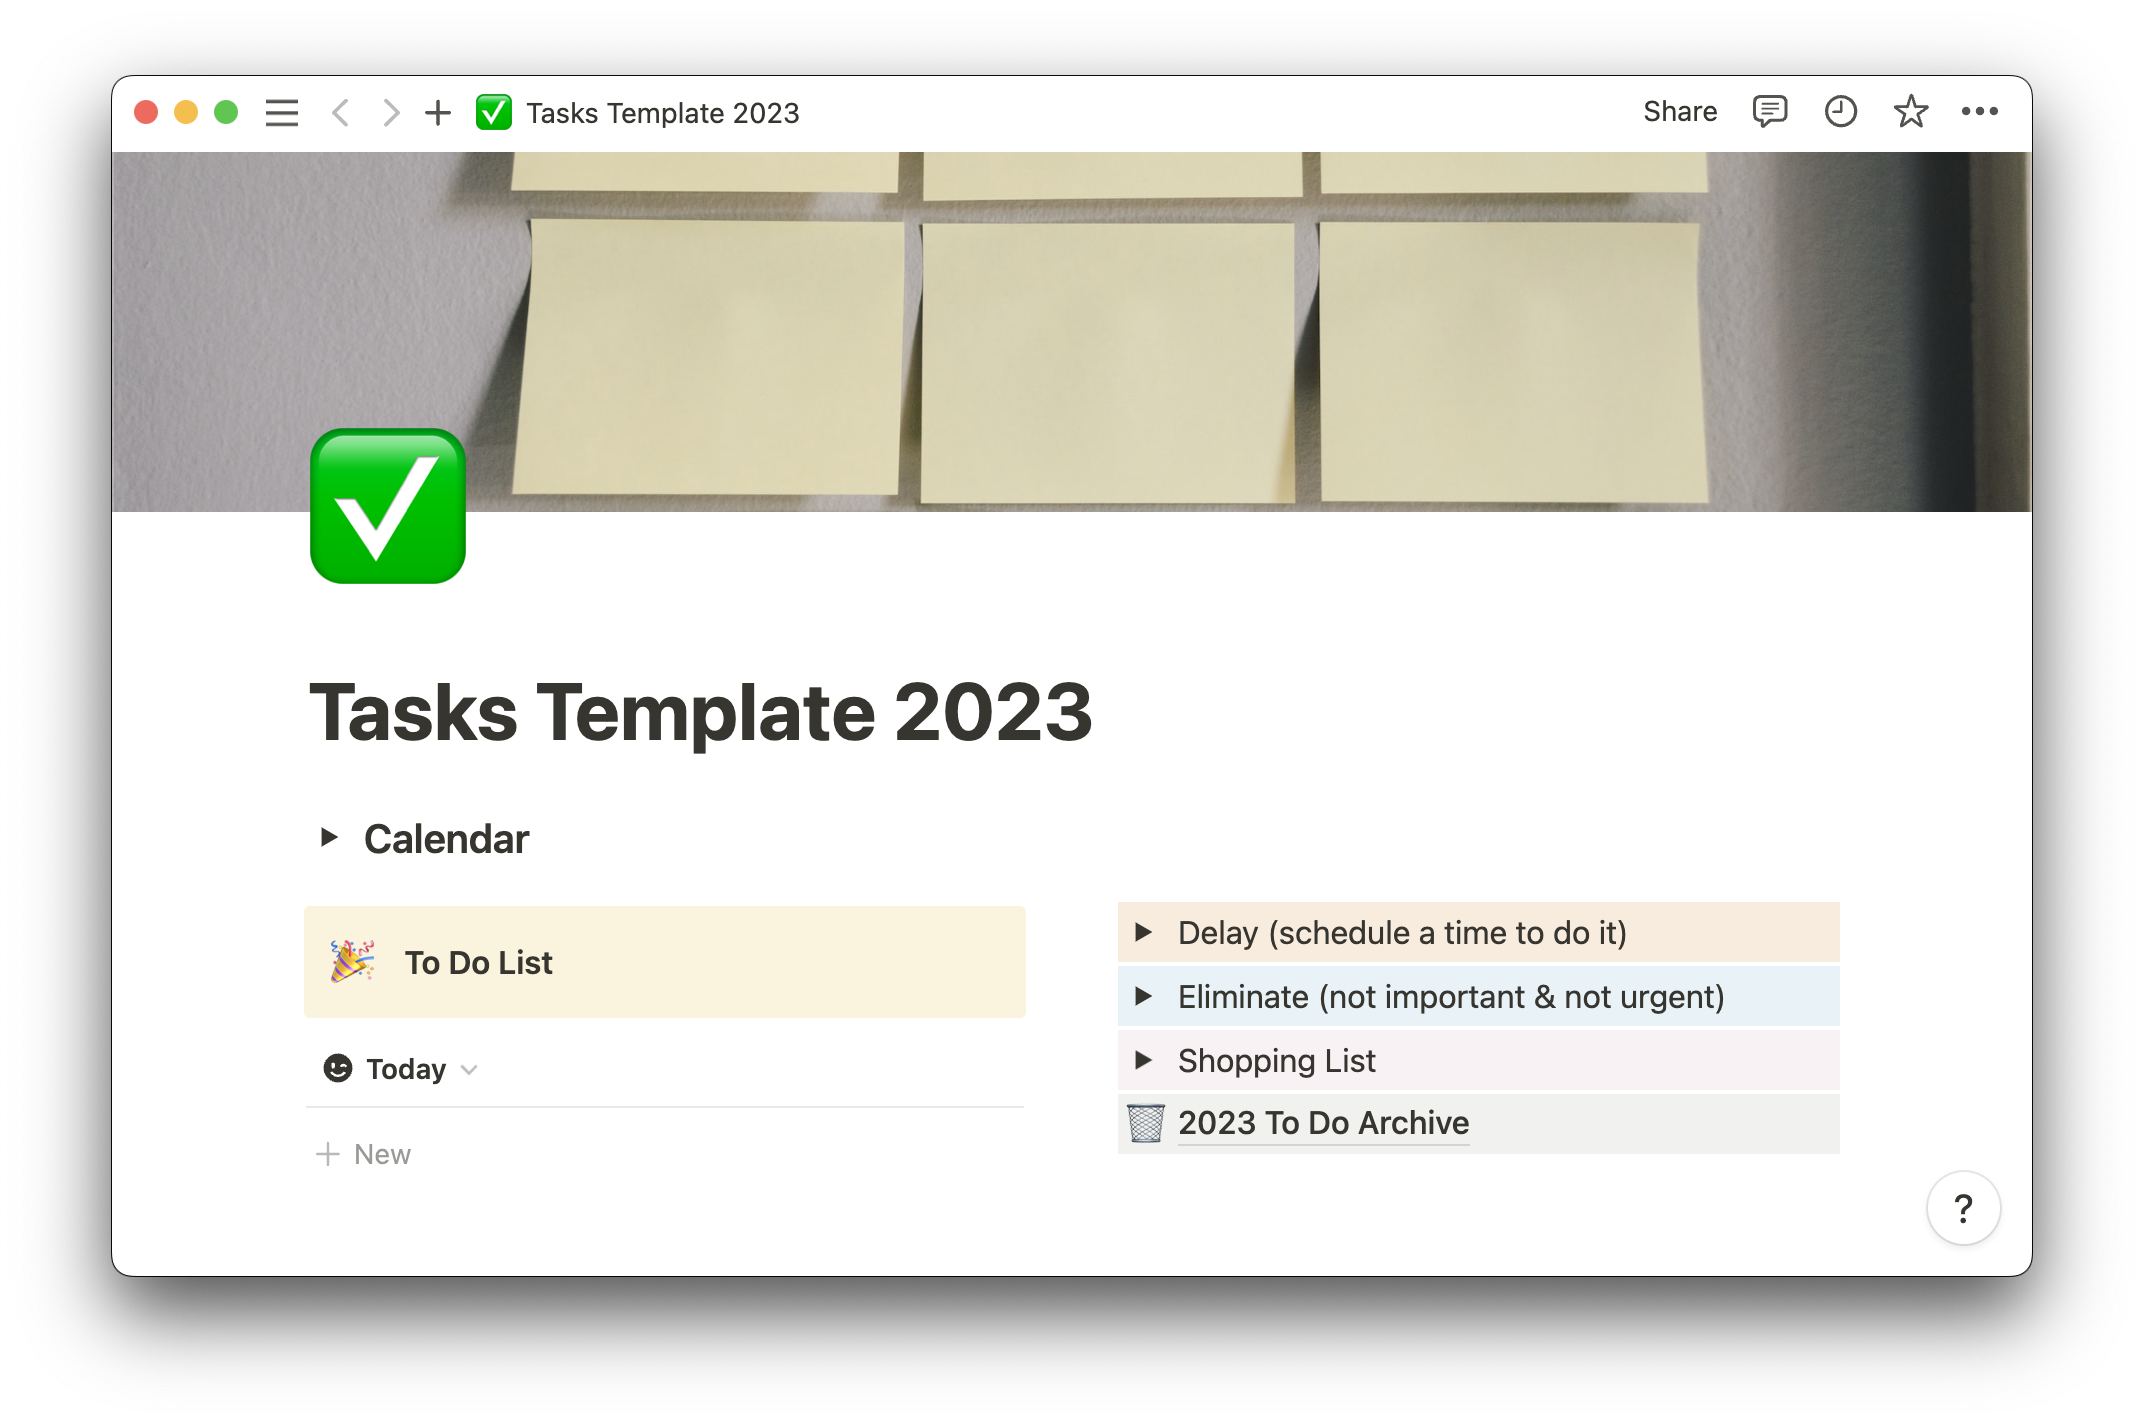 Tasks template 2023